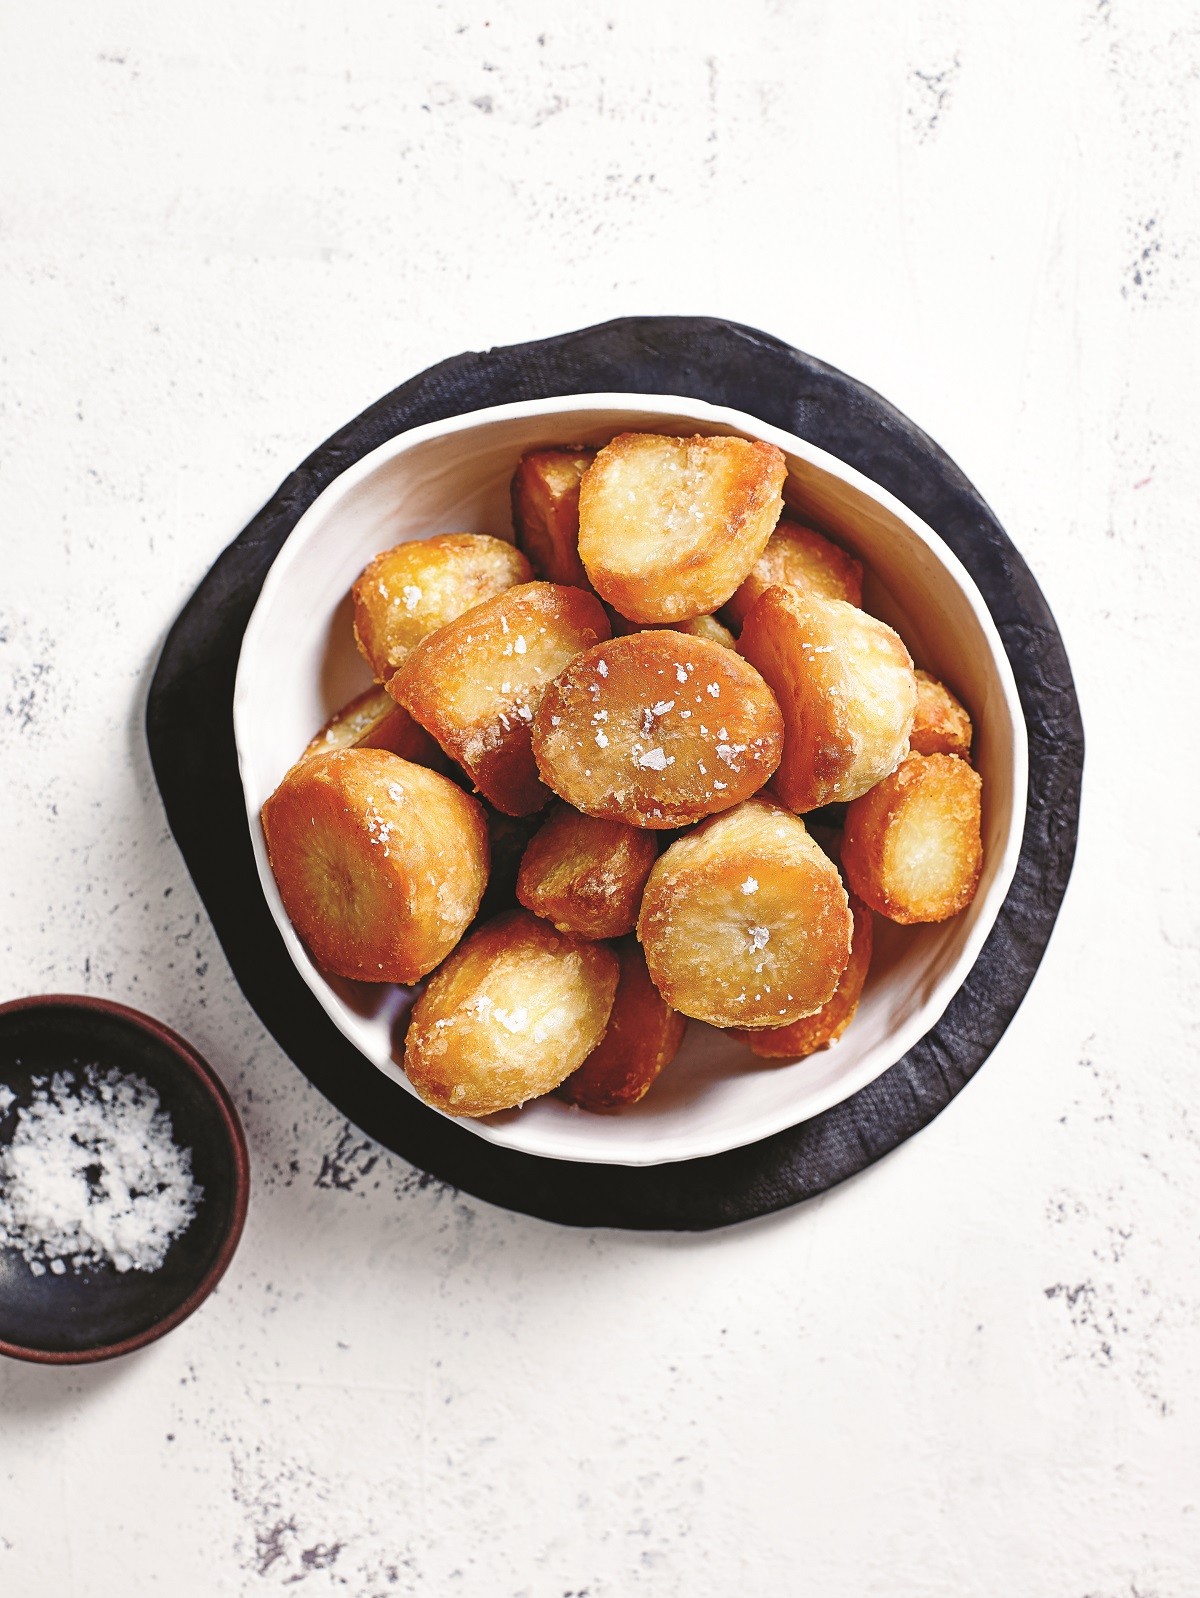 Bowl of roast potatoes